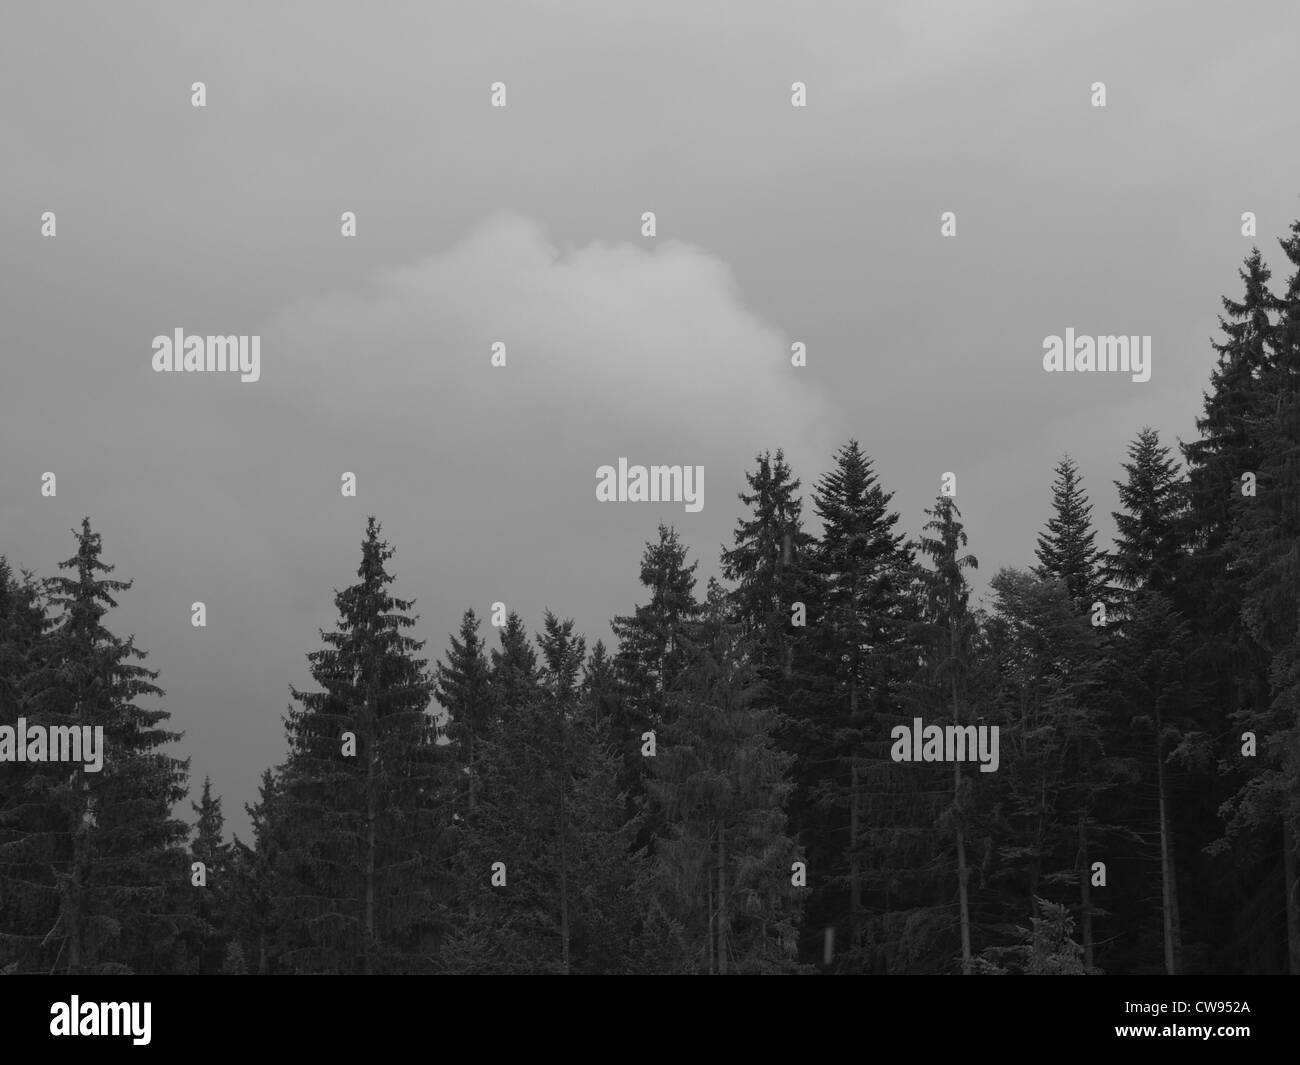 Paesaggio di legno con cielo nuvoloso, in bianco e nero / Wald Landschaft mit bewölktem Himmel, schwarz-weiß Foto Stock